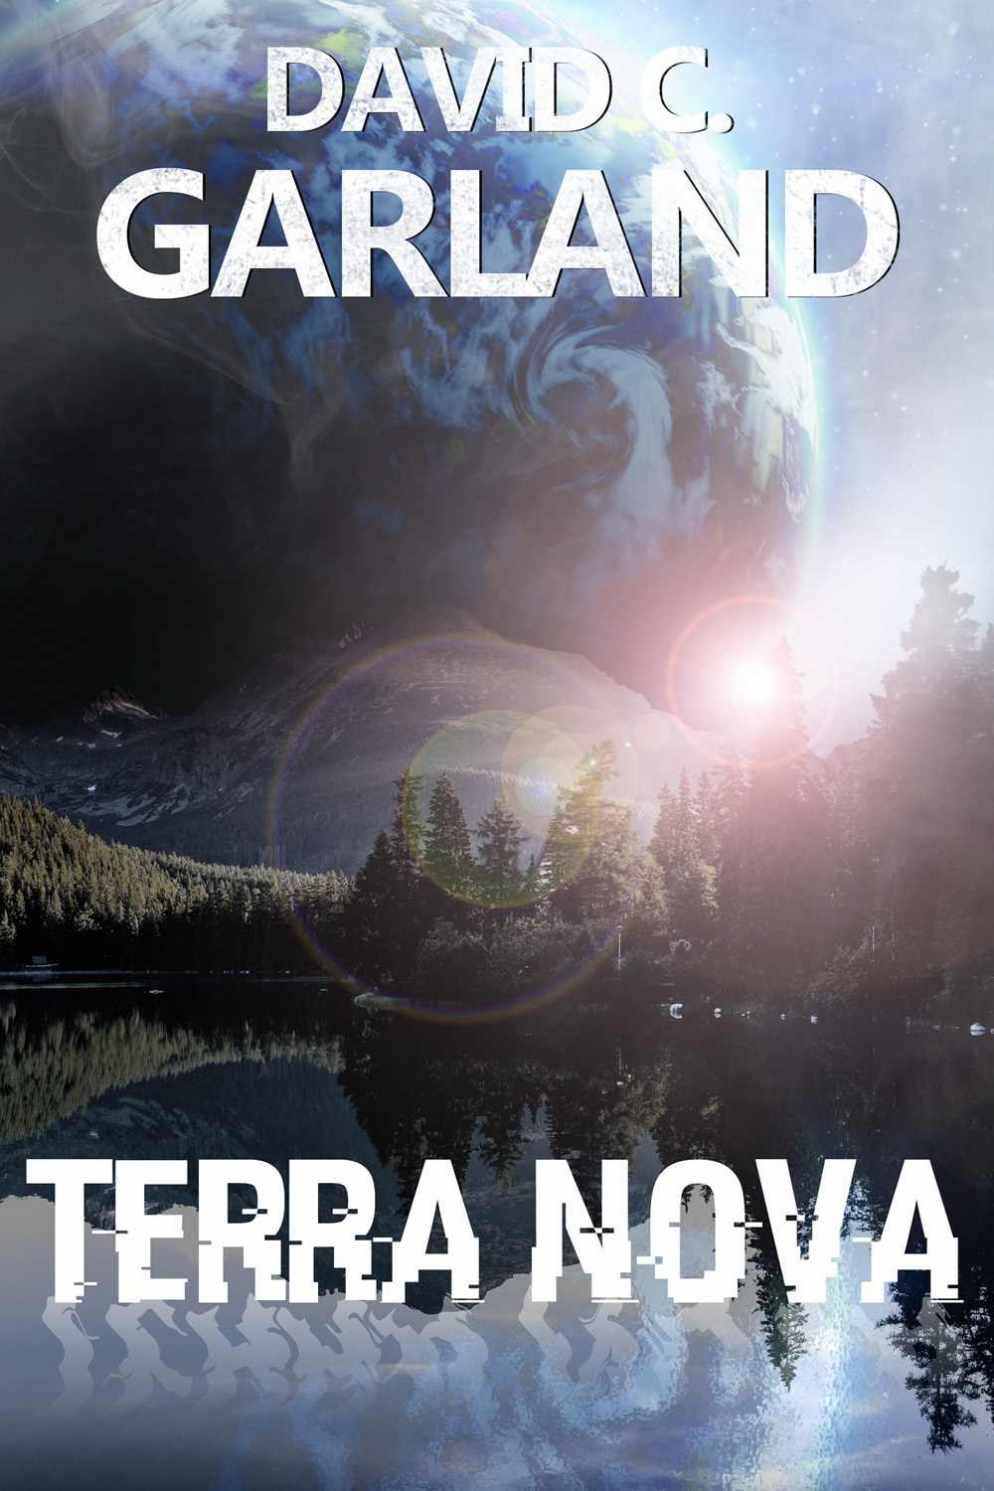 Terra Nova by M.T.G.